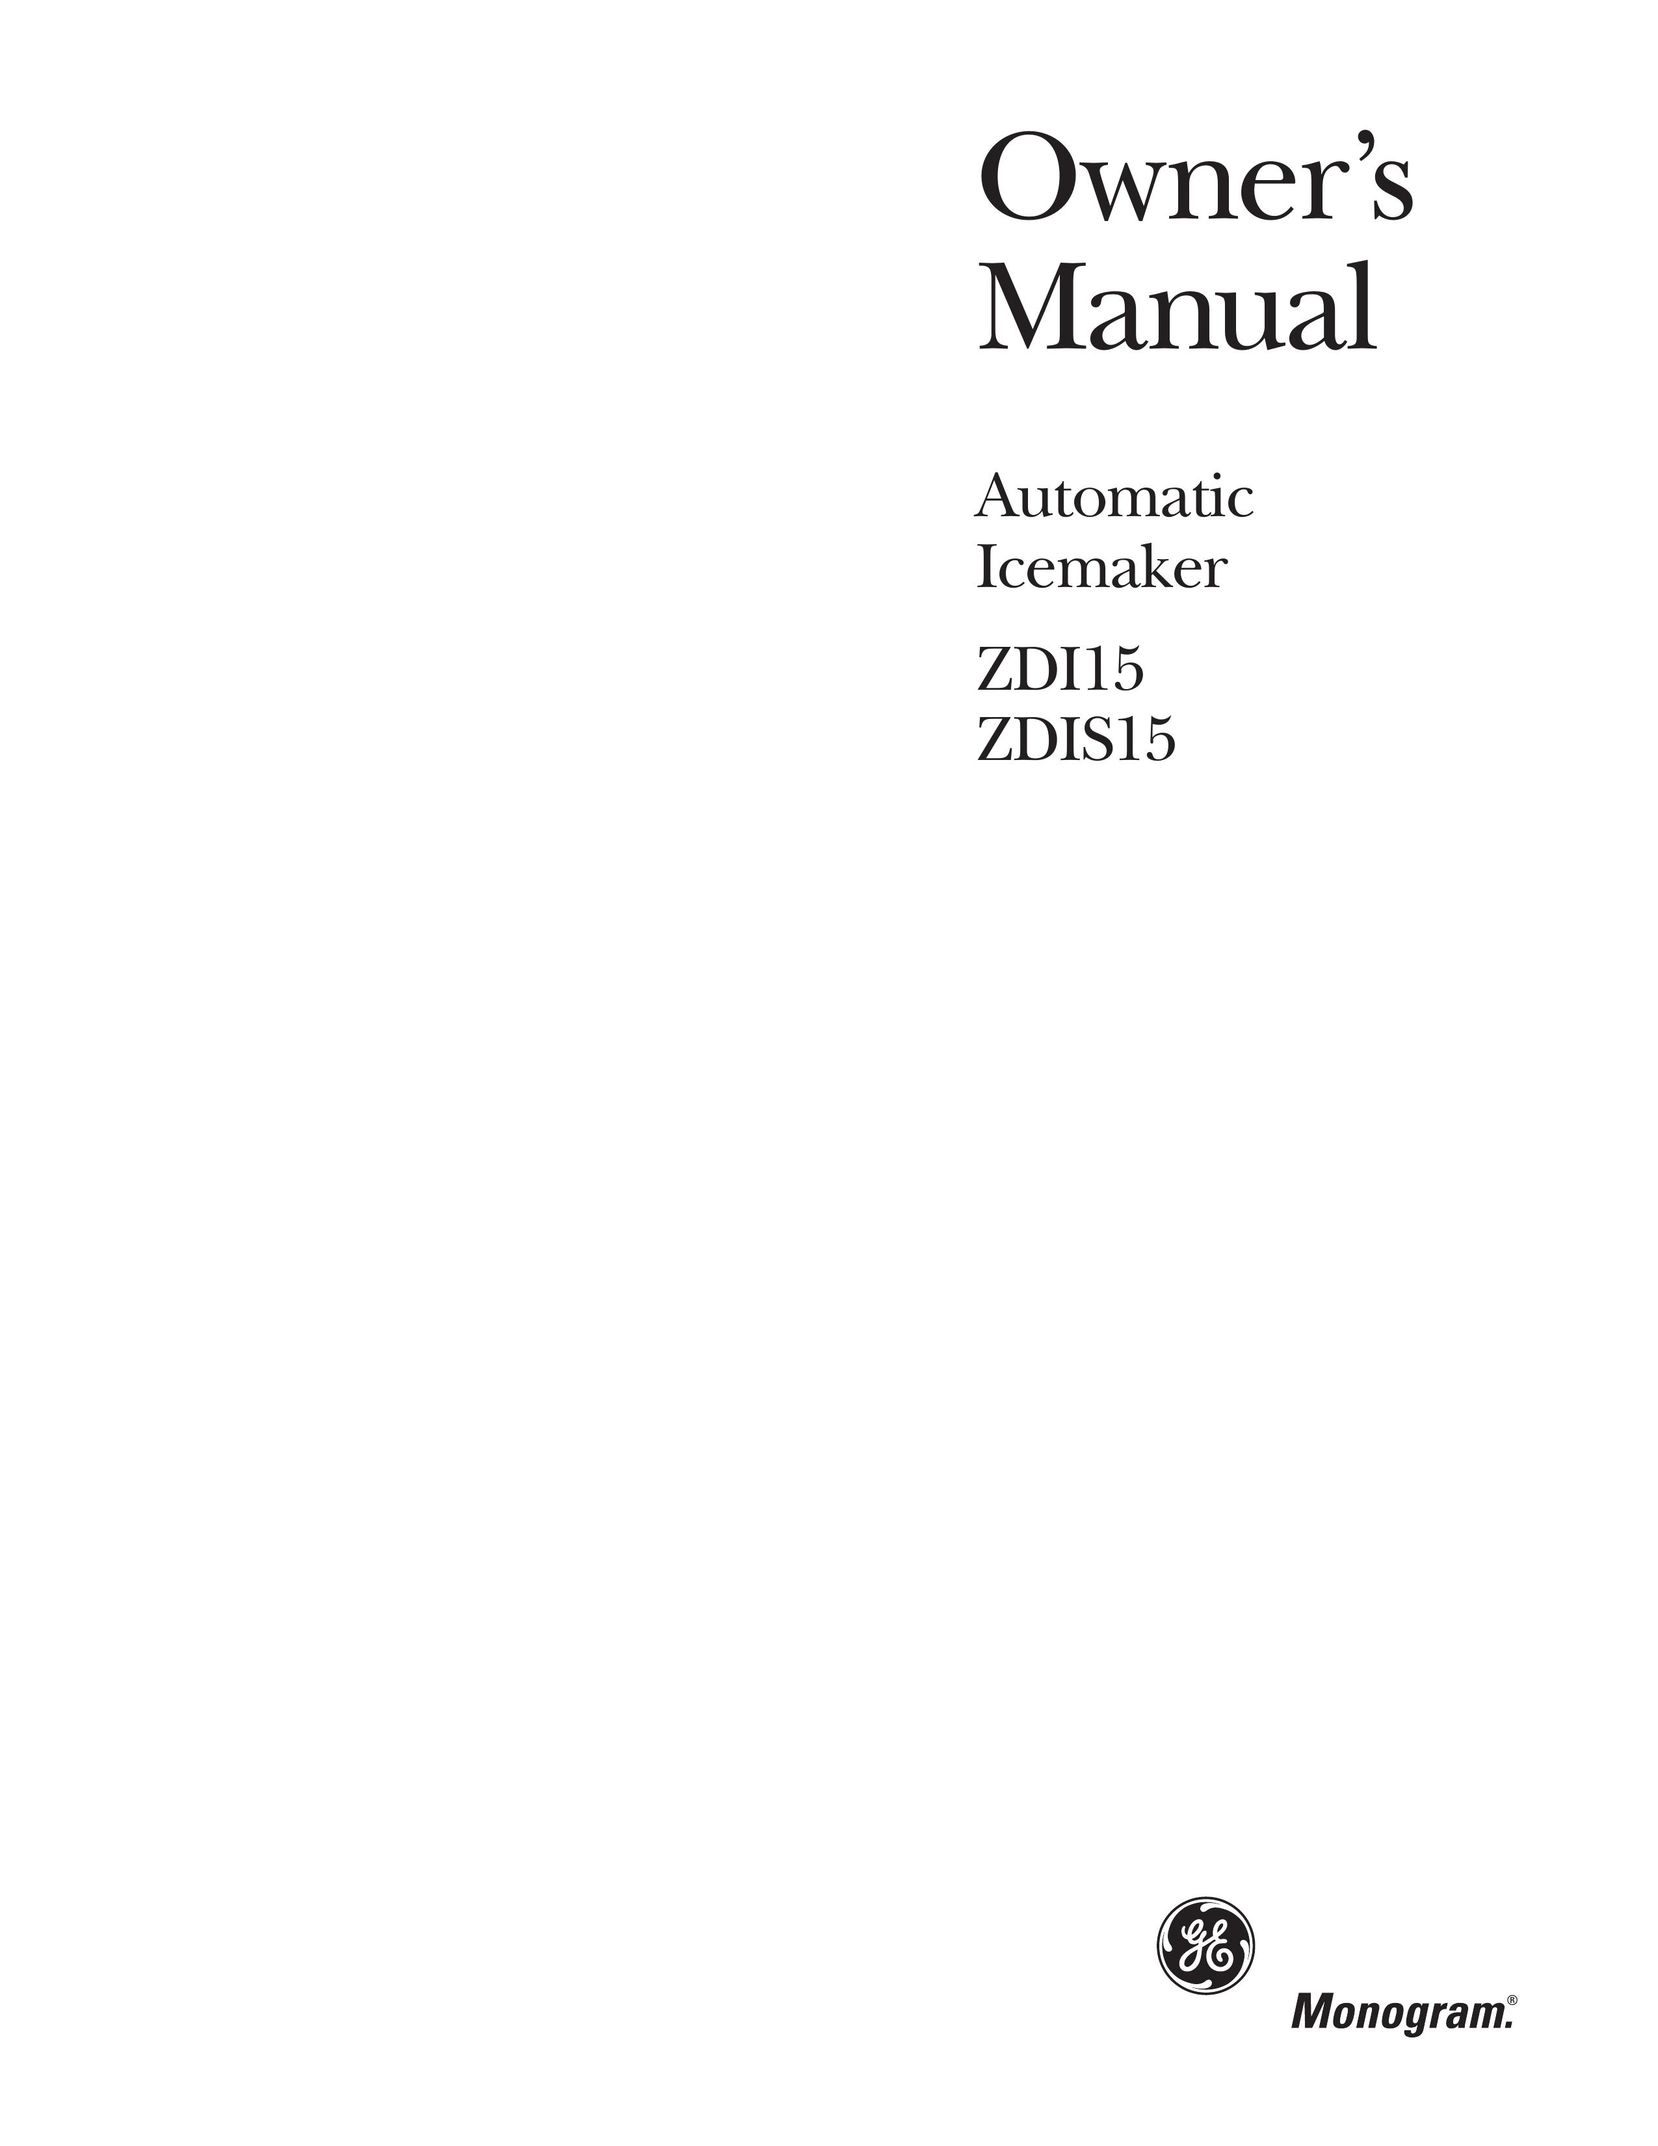 GE Monogram ZDI15 Ice Maker User Manual